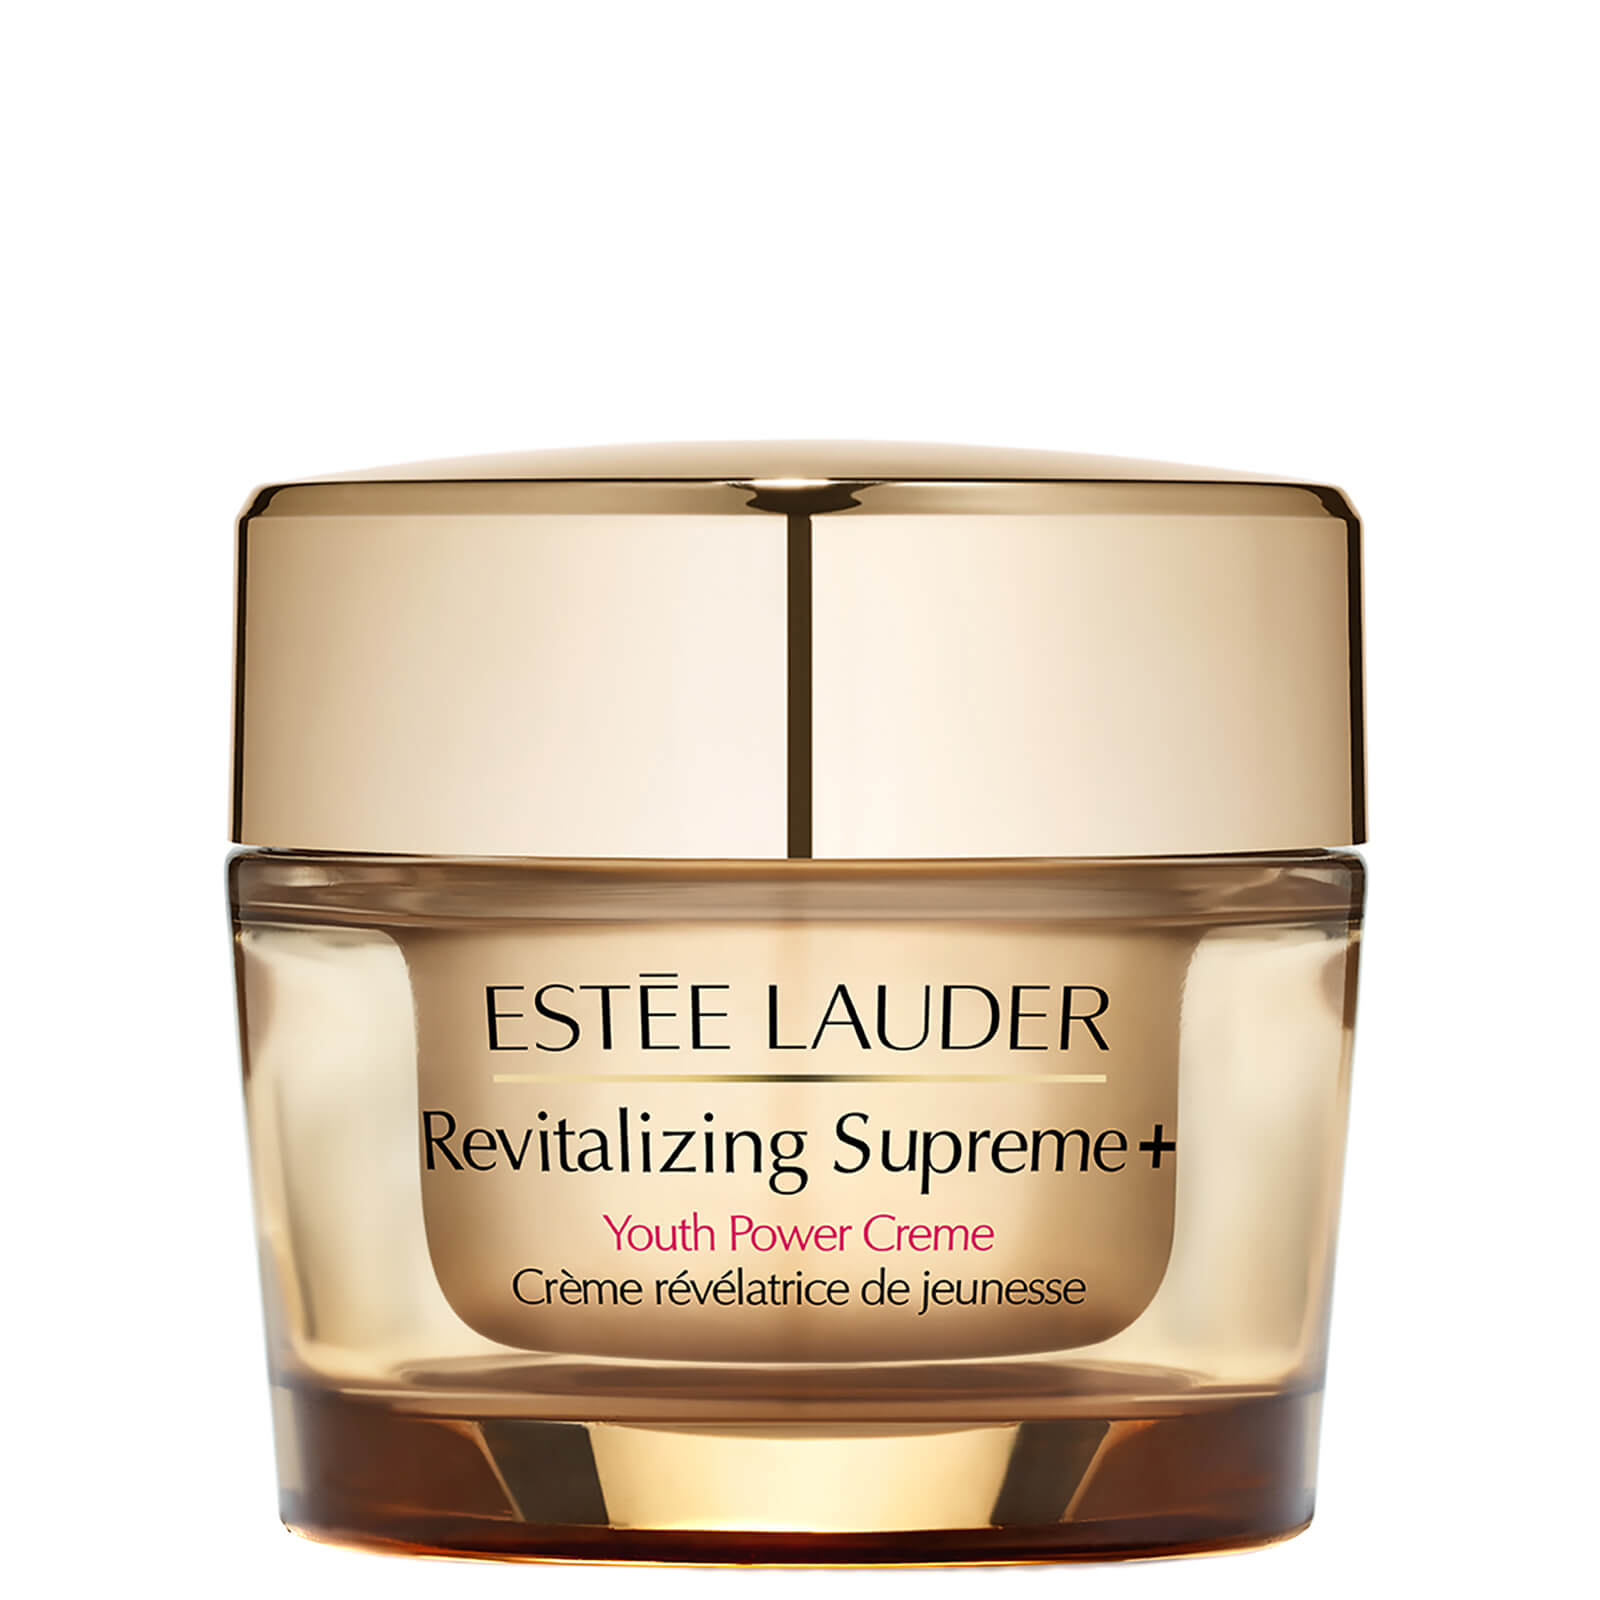 Estee Lauder Revitalizing Supreme+ Youth Power Creme Moisturiser 15ml